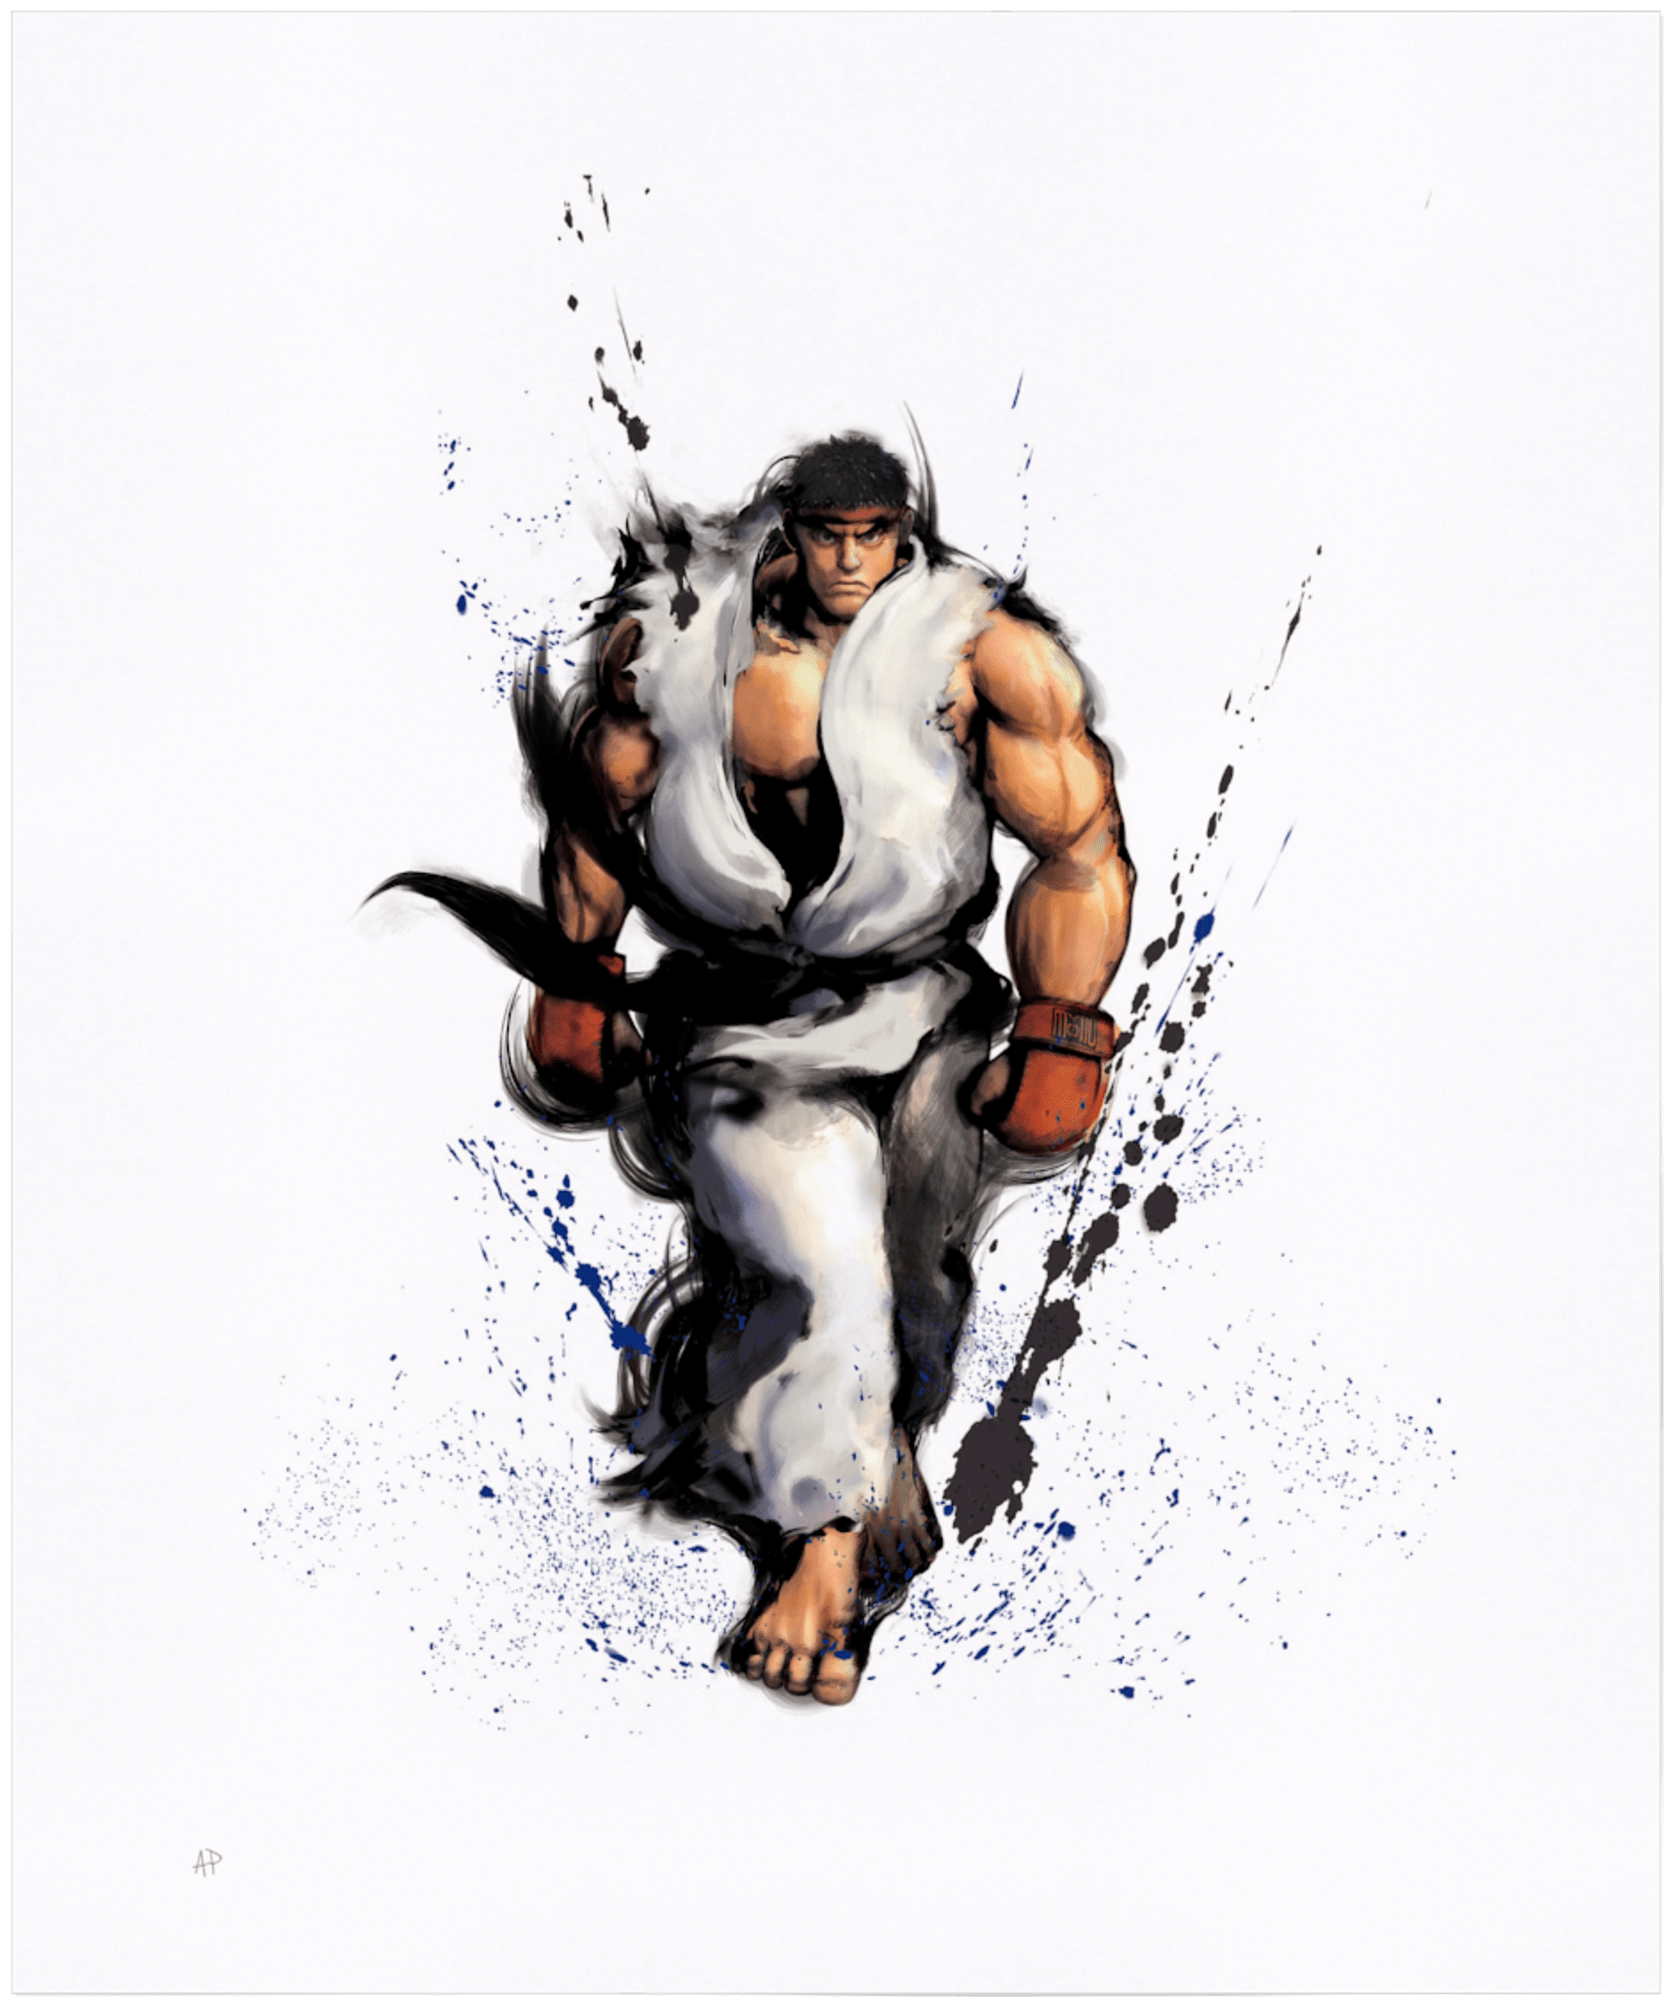 Ryu Official Portrait Art from Street Fighter Alpha 3